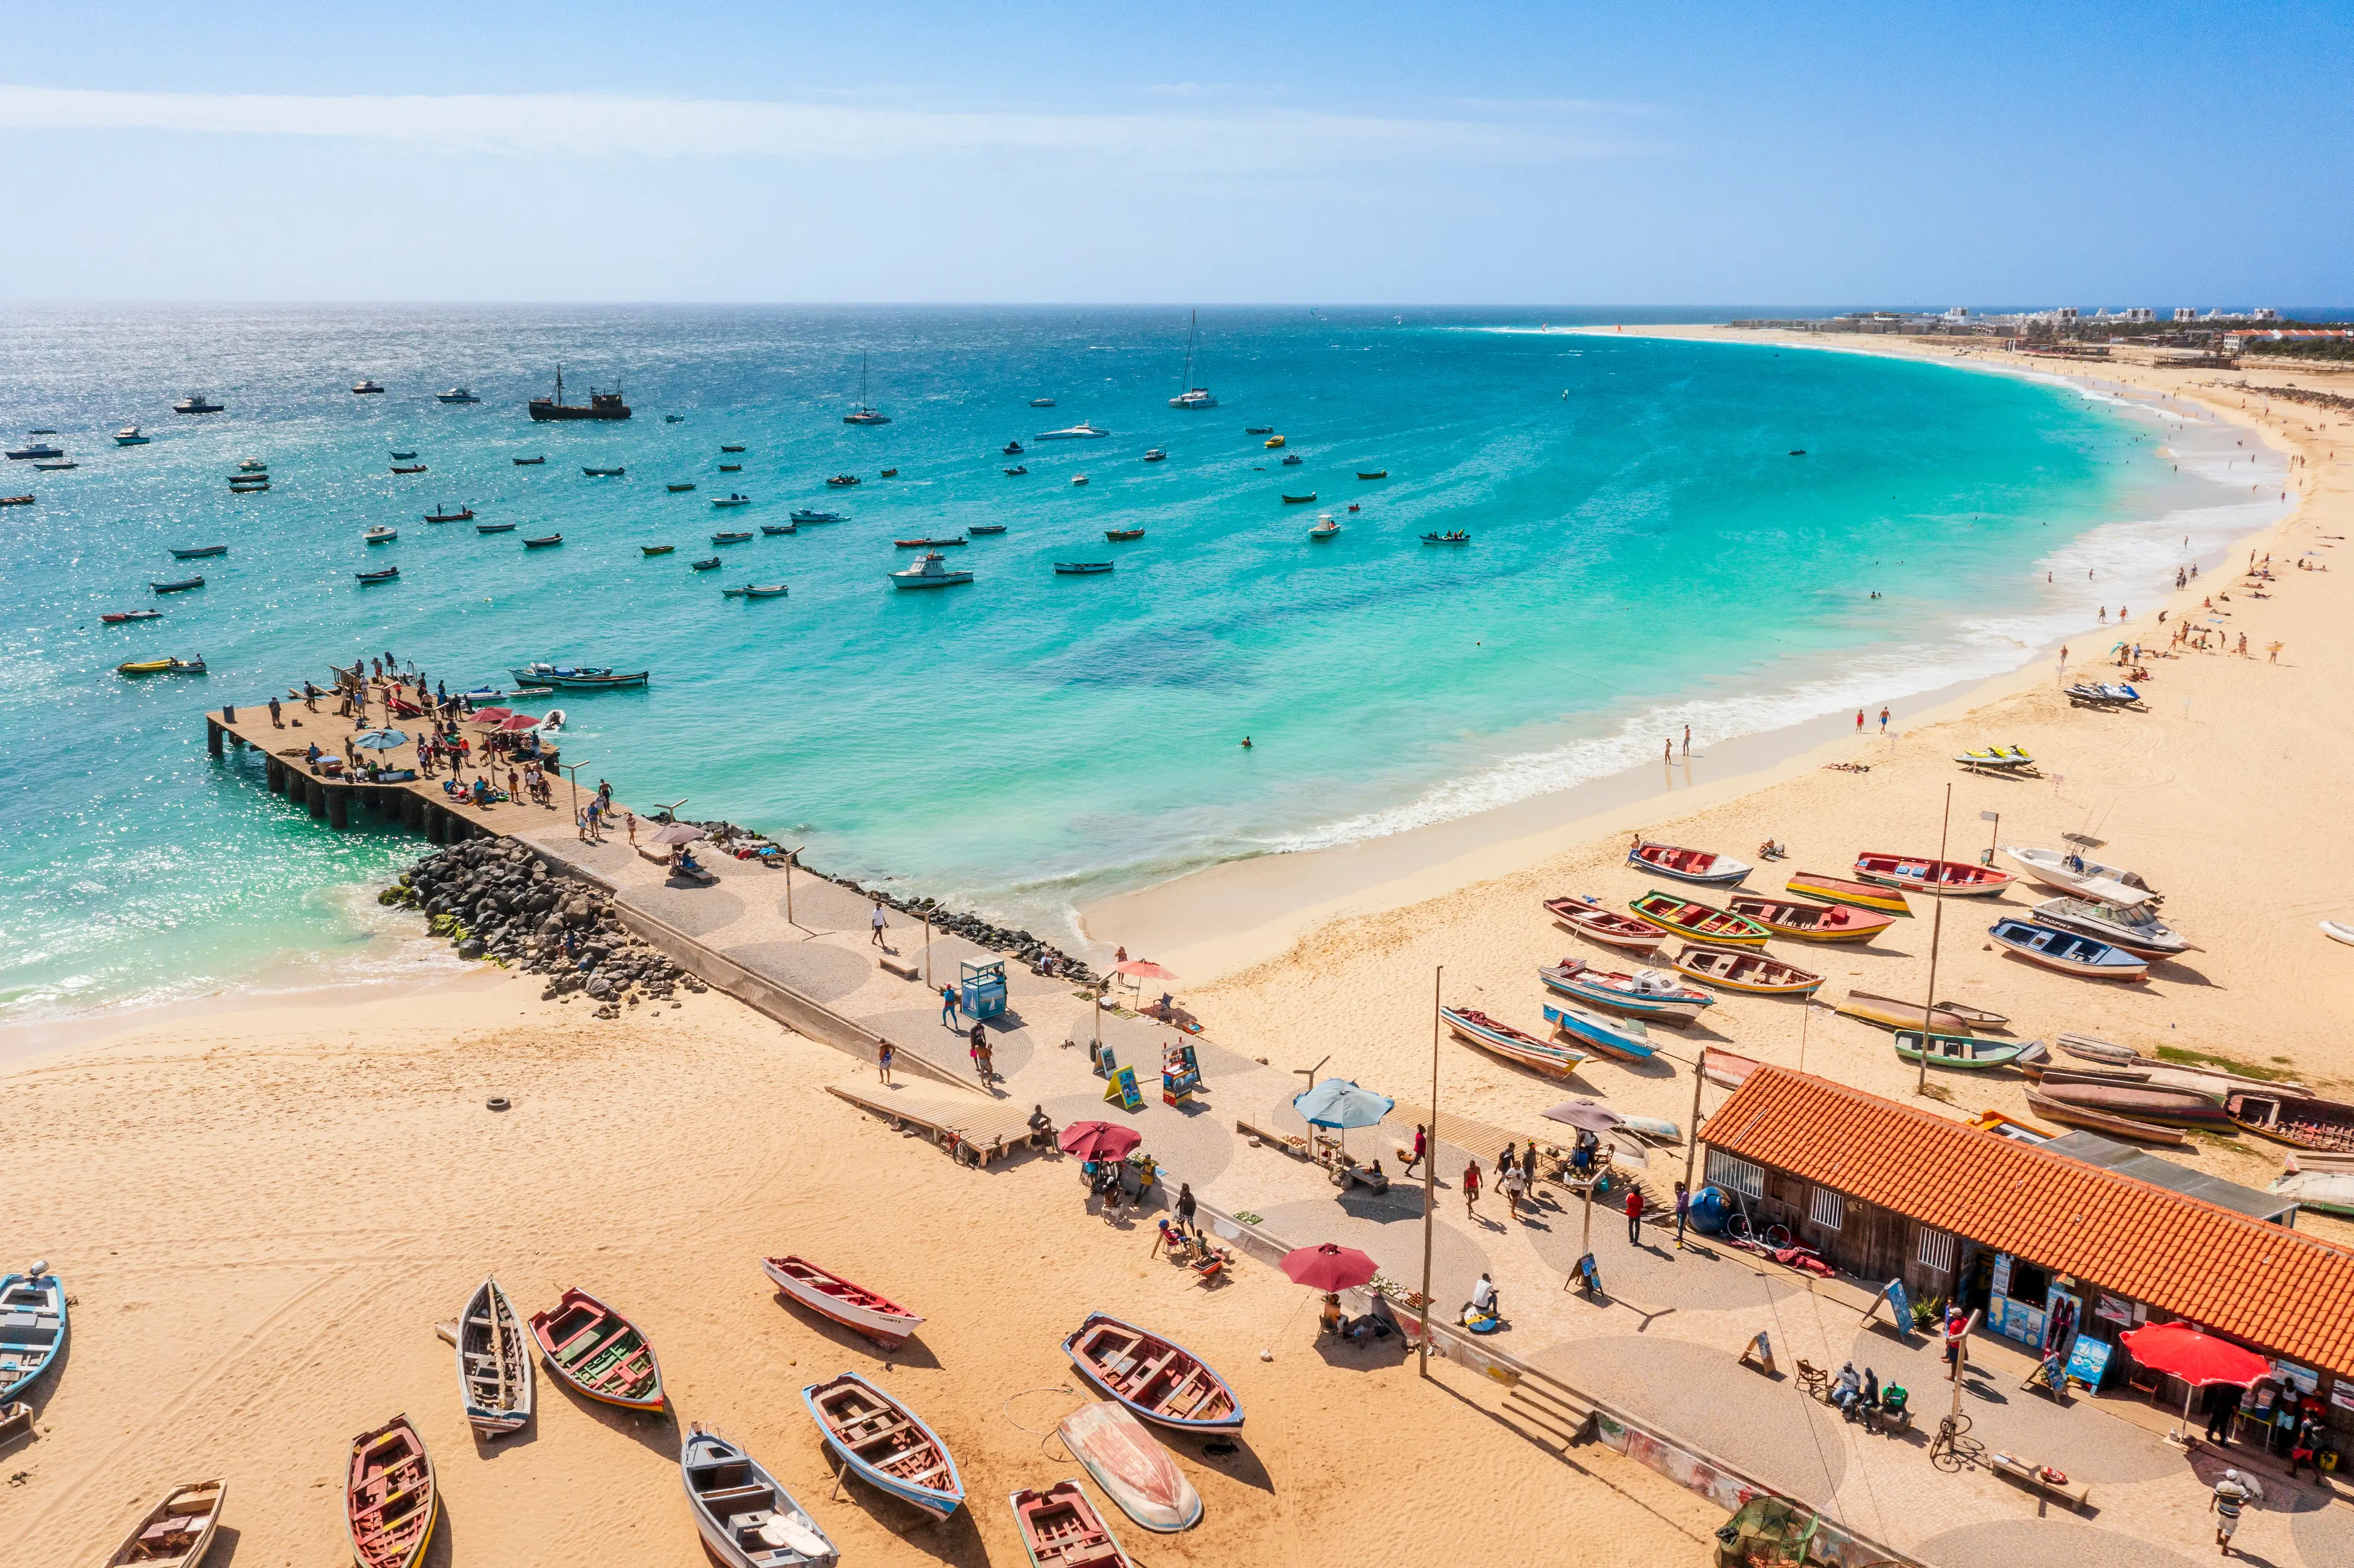 Explore Cape Verde: A Single Day Itinerary